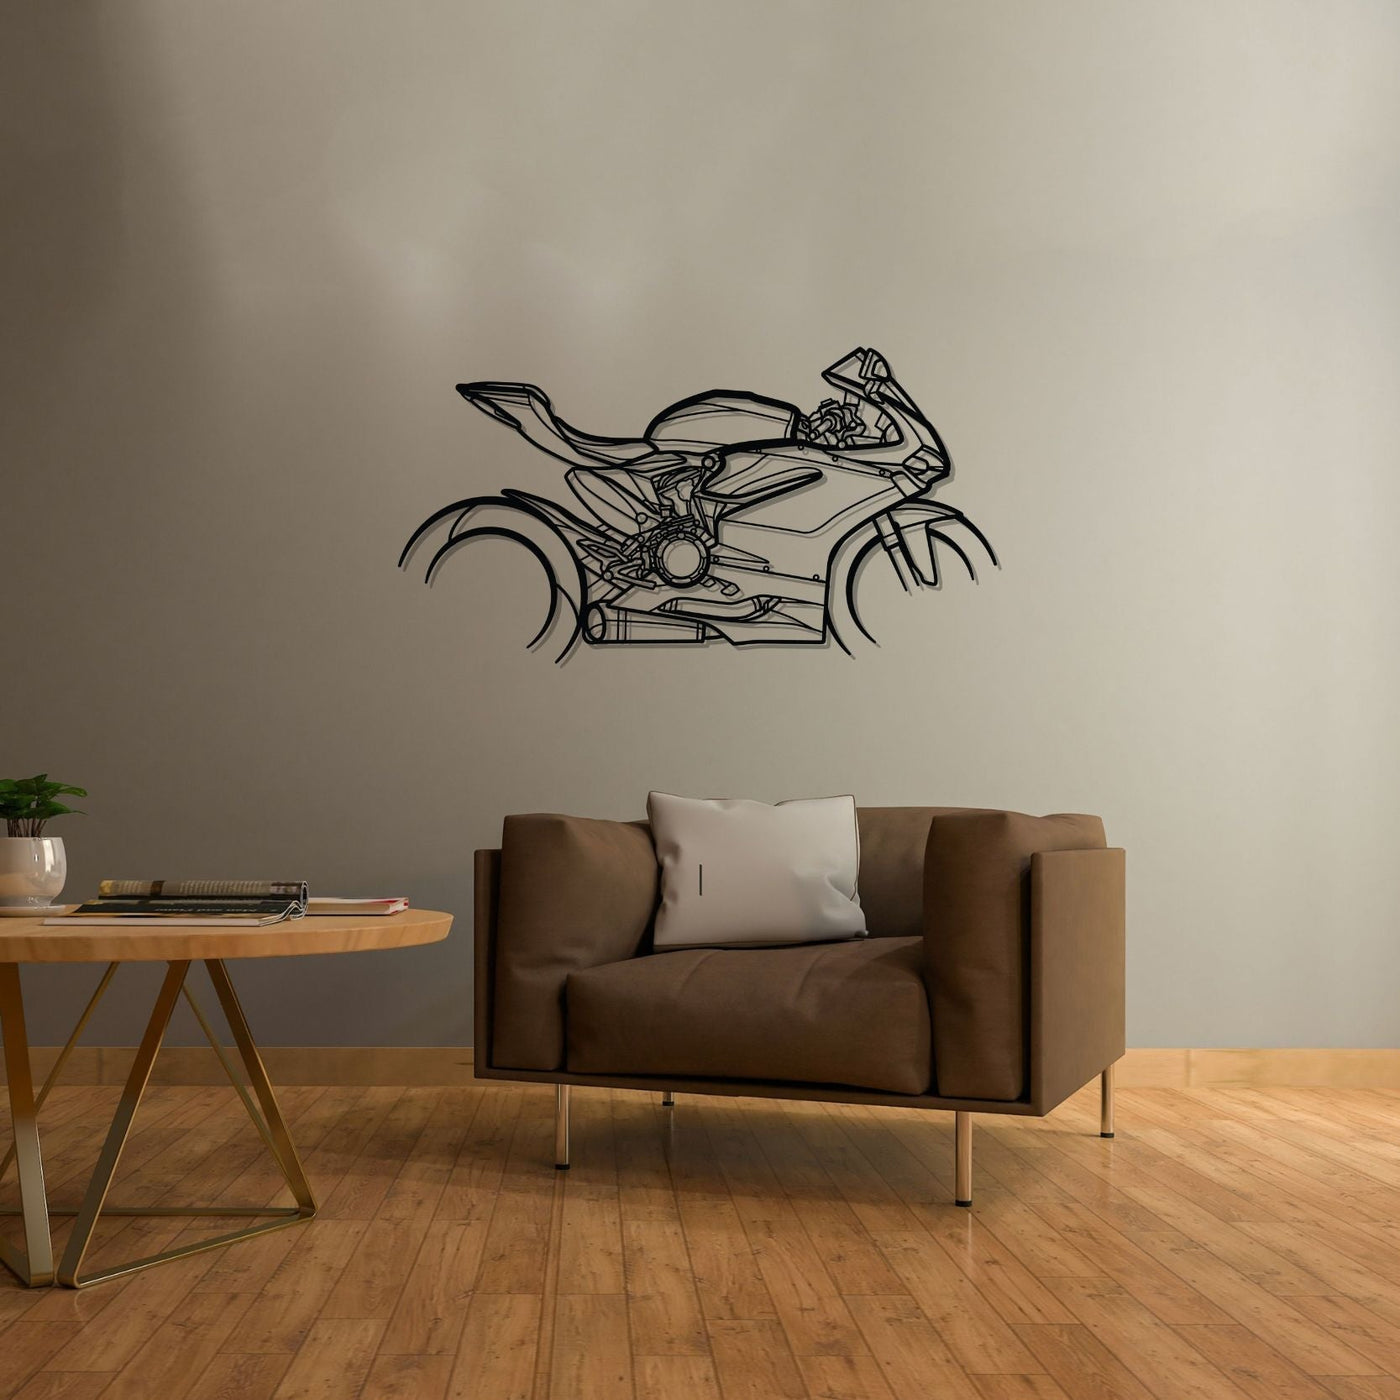 Panigale 1299 2016 Silhouette Metal Wall Art